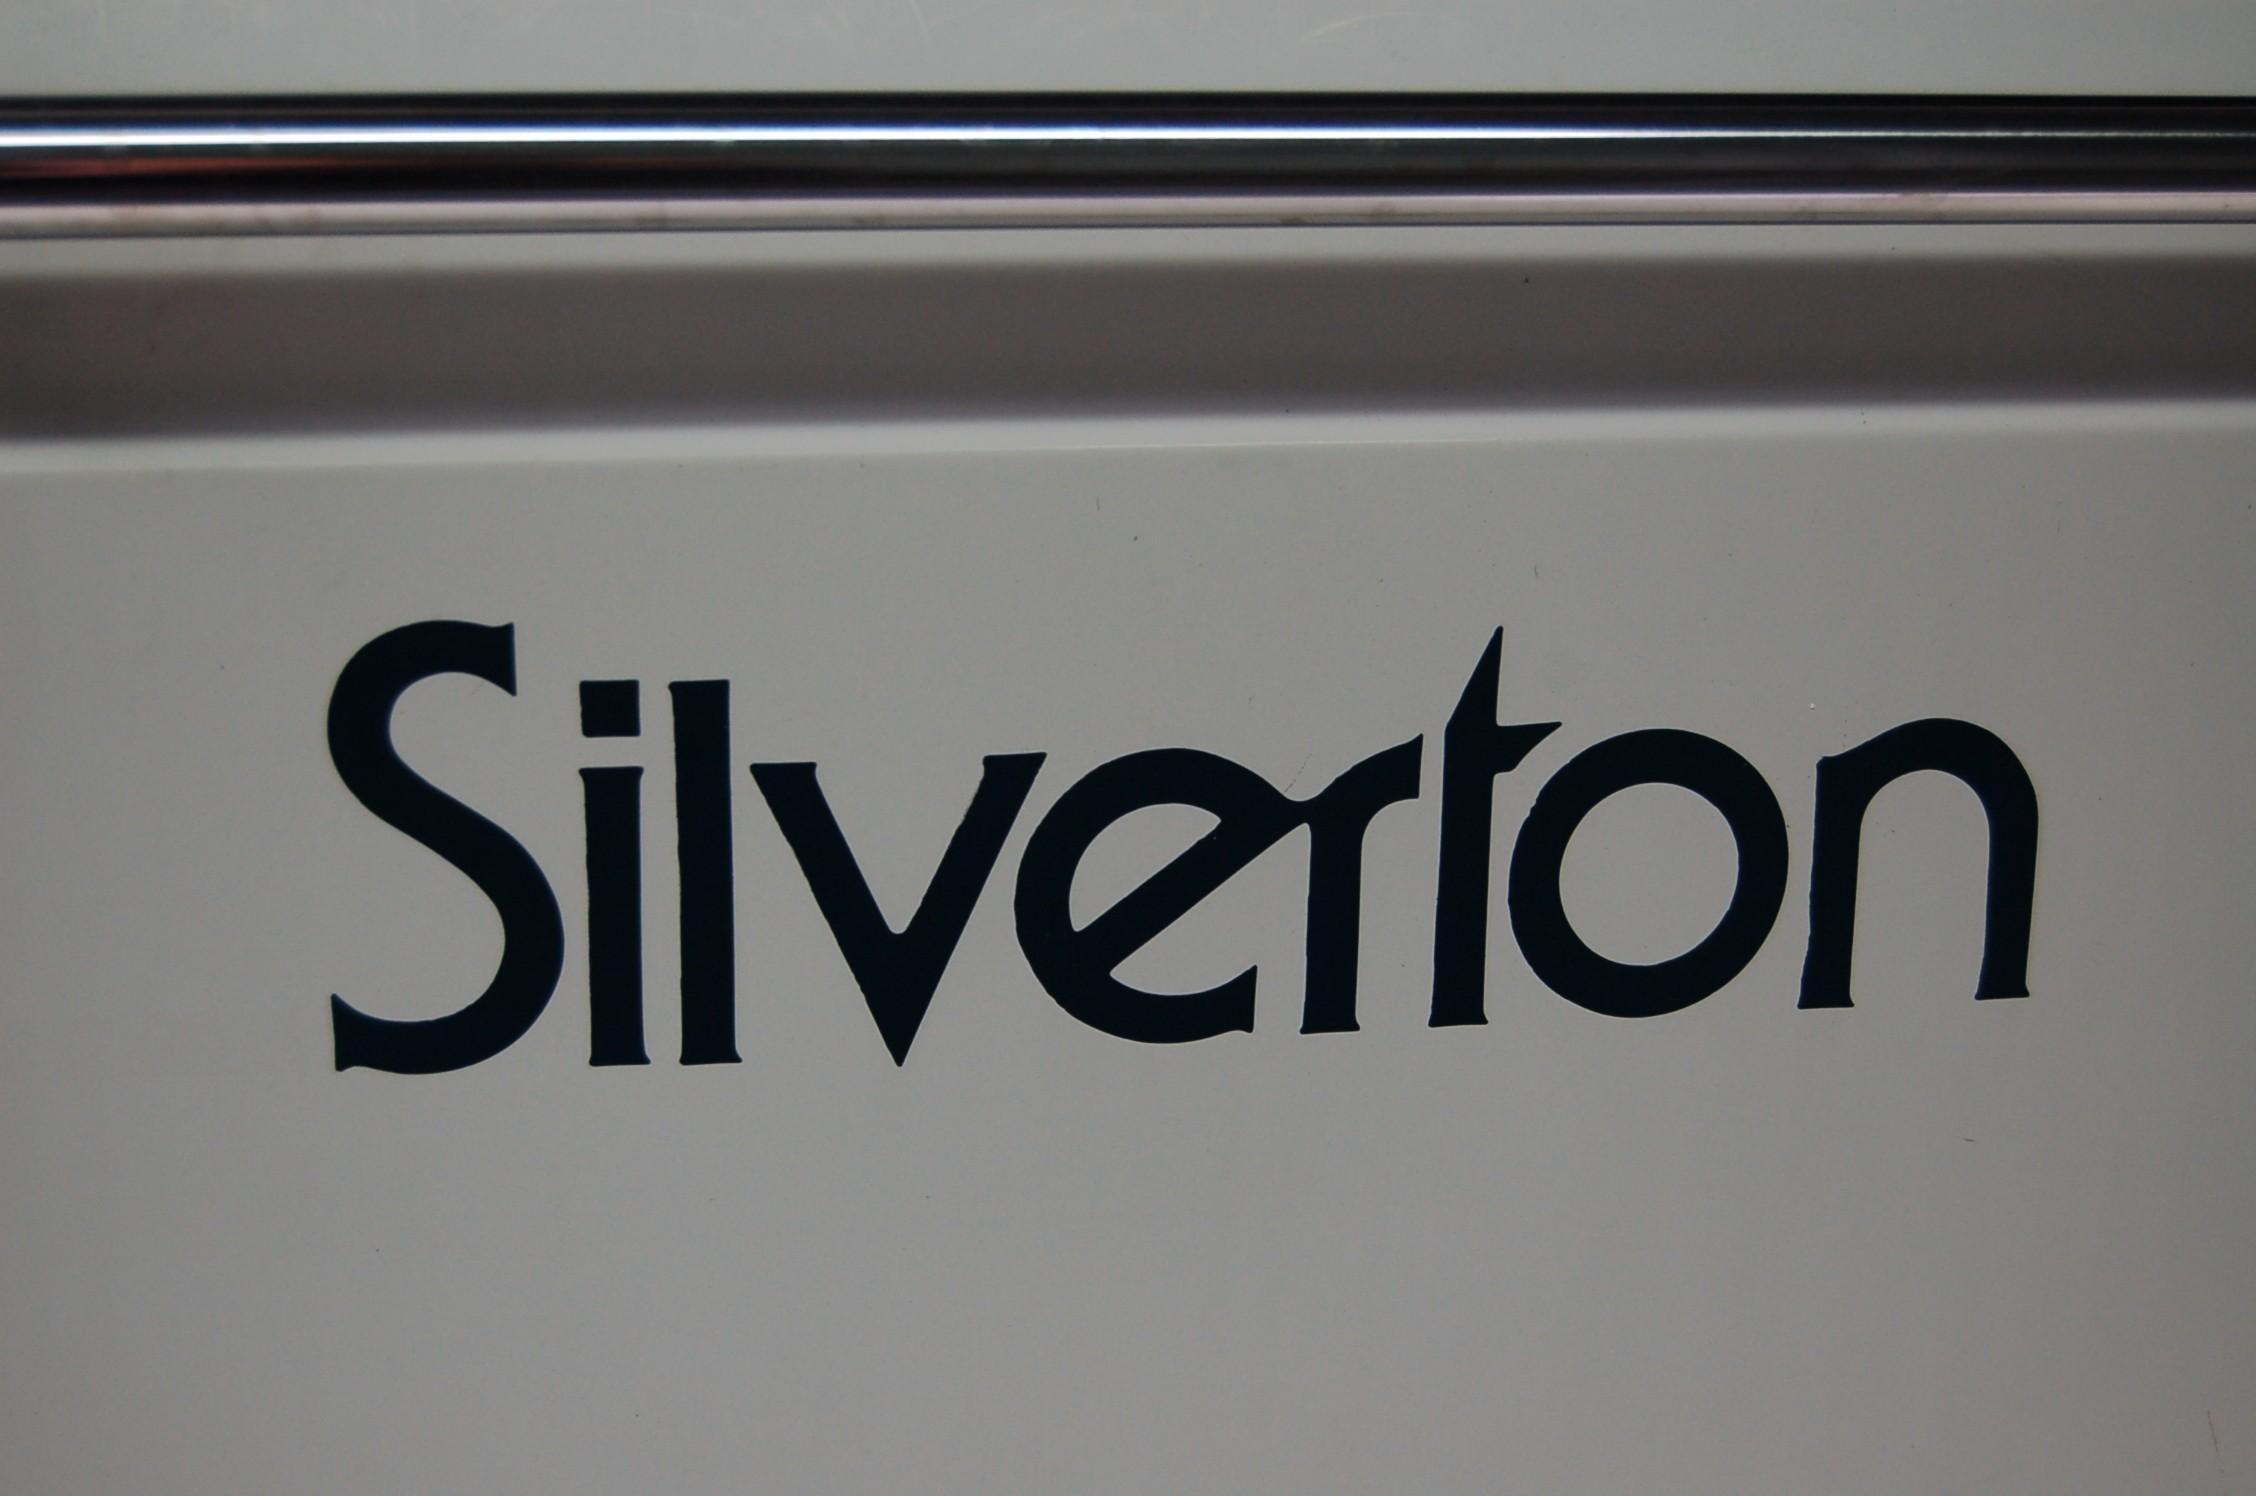 Silverton Logo - Silverton 1996 Port Moody. Denison Yacht Sales